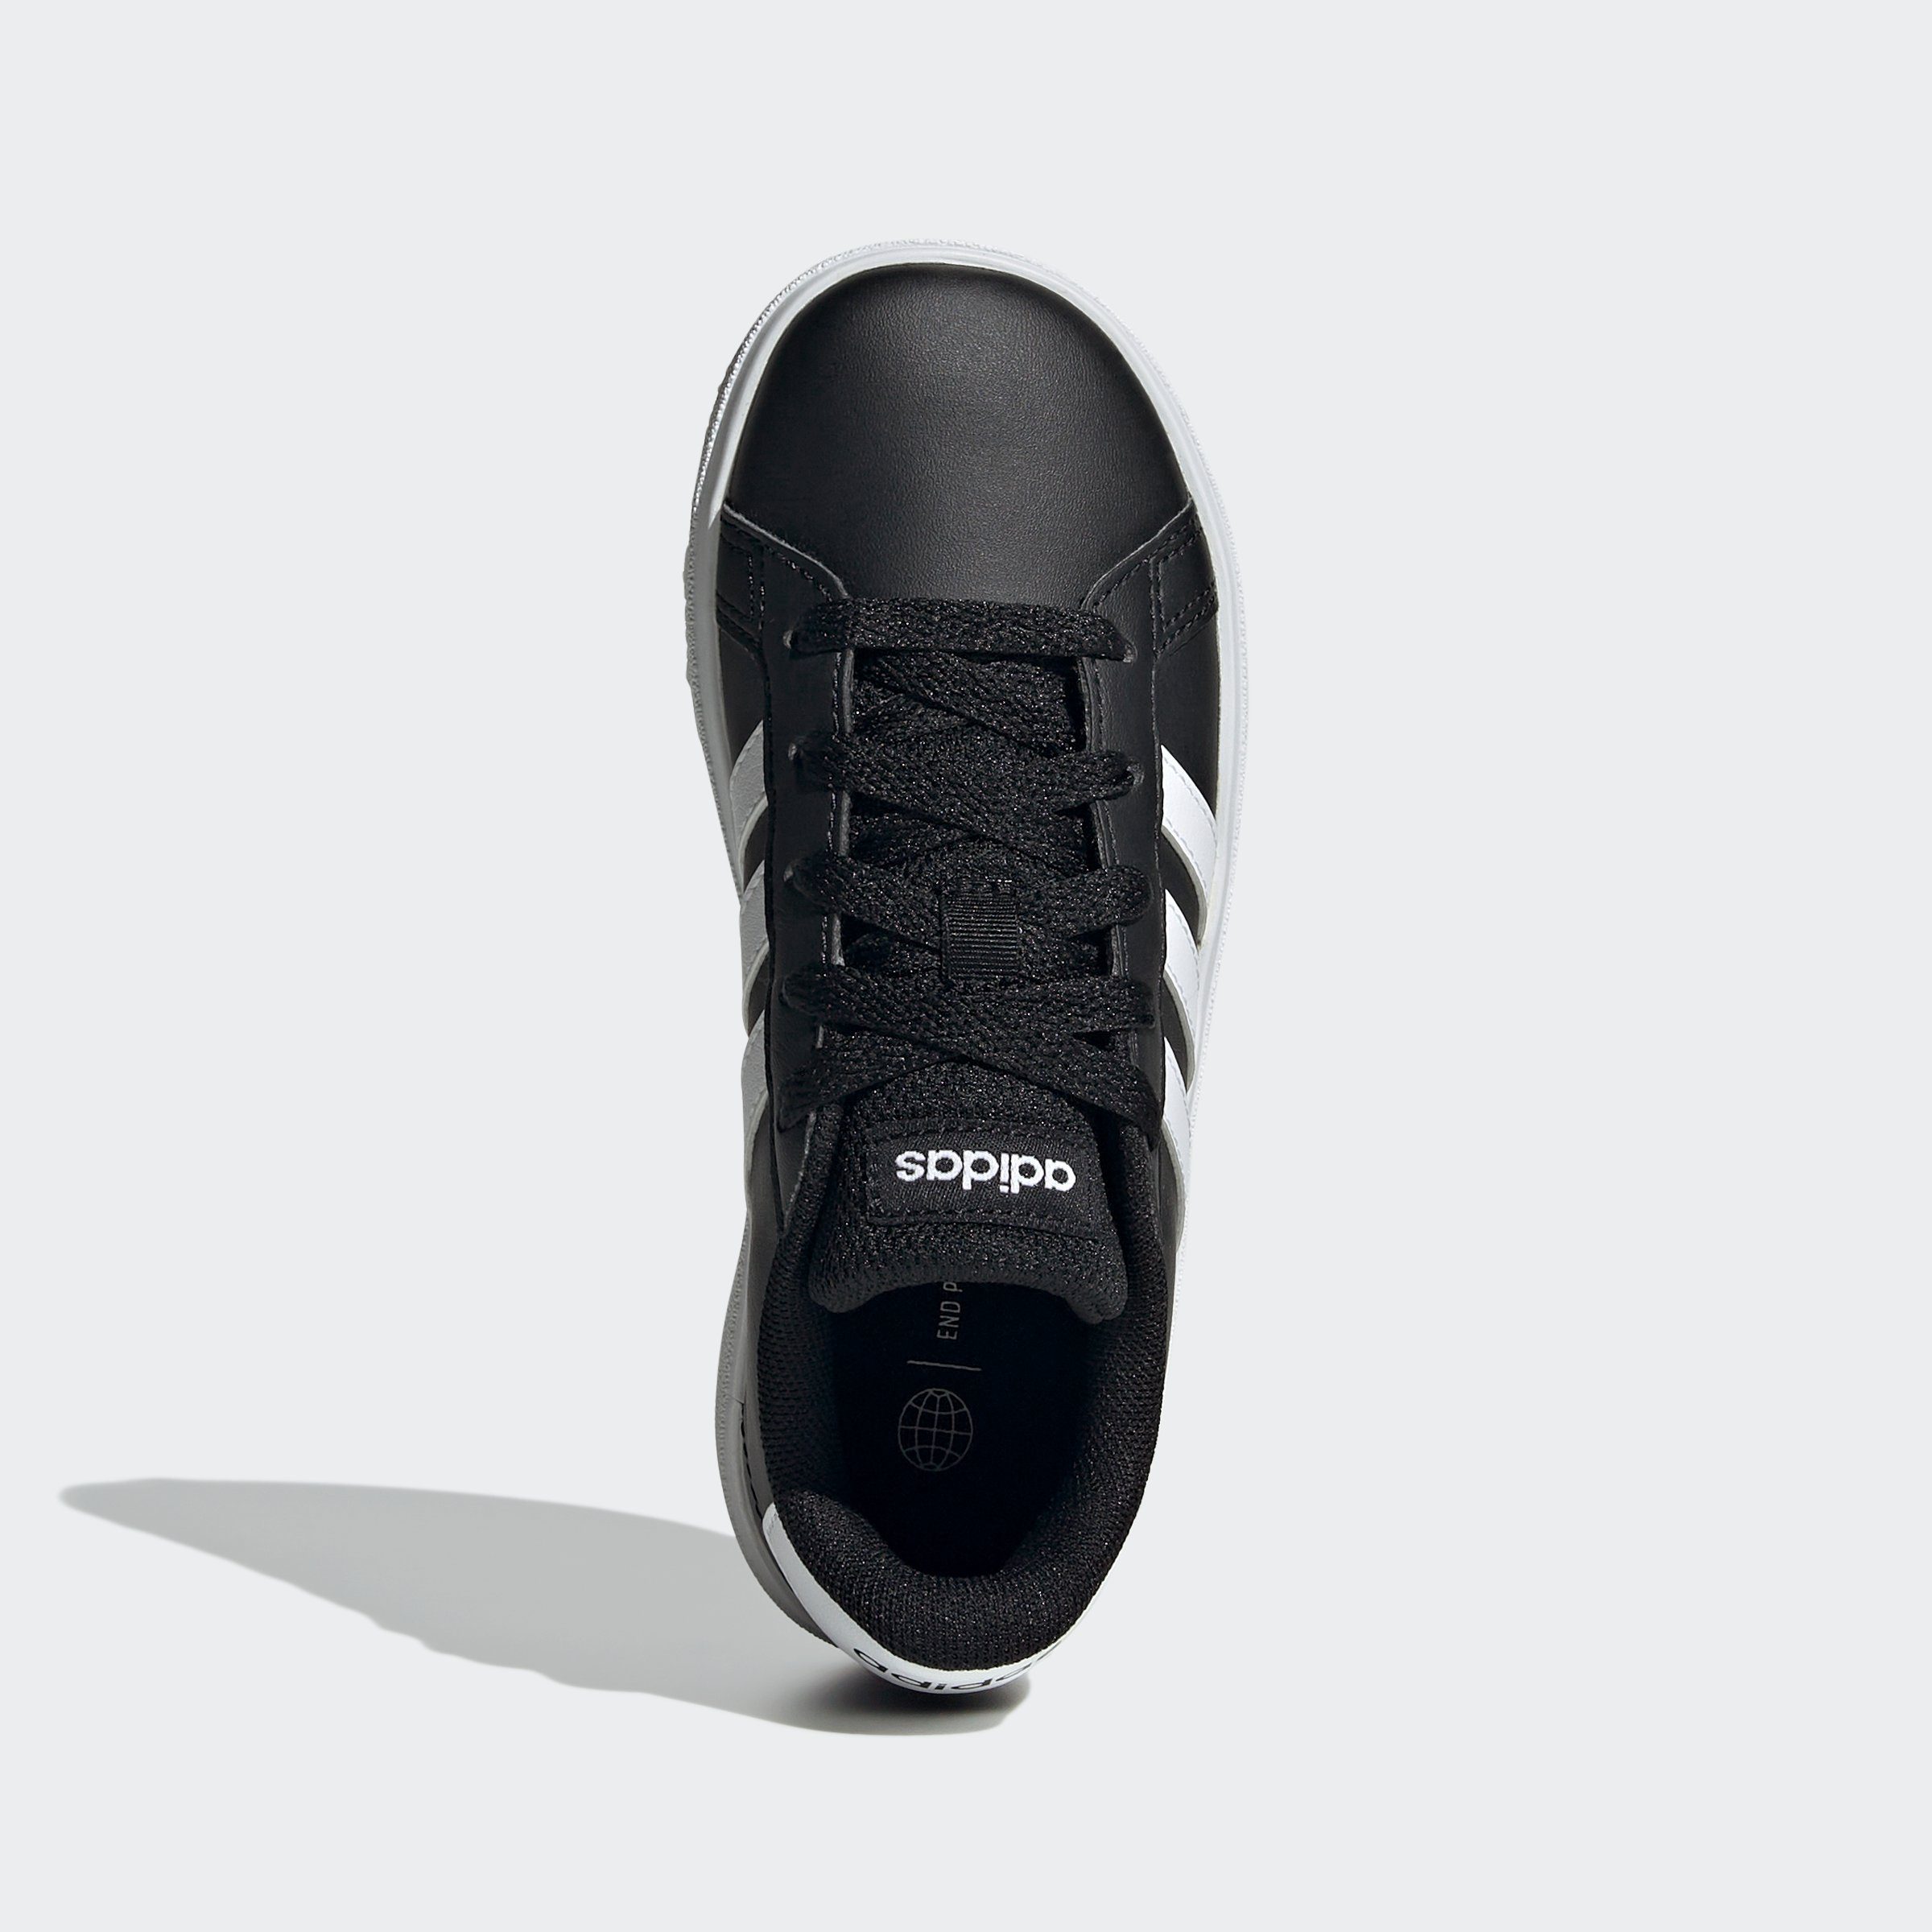 Superstar auf Black adidas LIFESTYLE / Design LACE-UP Sportswear TENNIS Black White Cloud adidas des Core GRAND COURT den Spuren Sneaker Core /